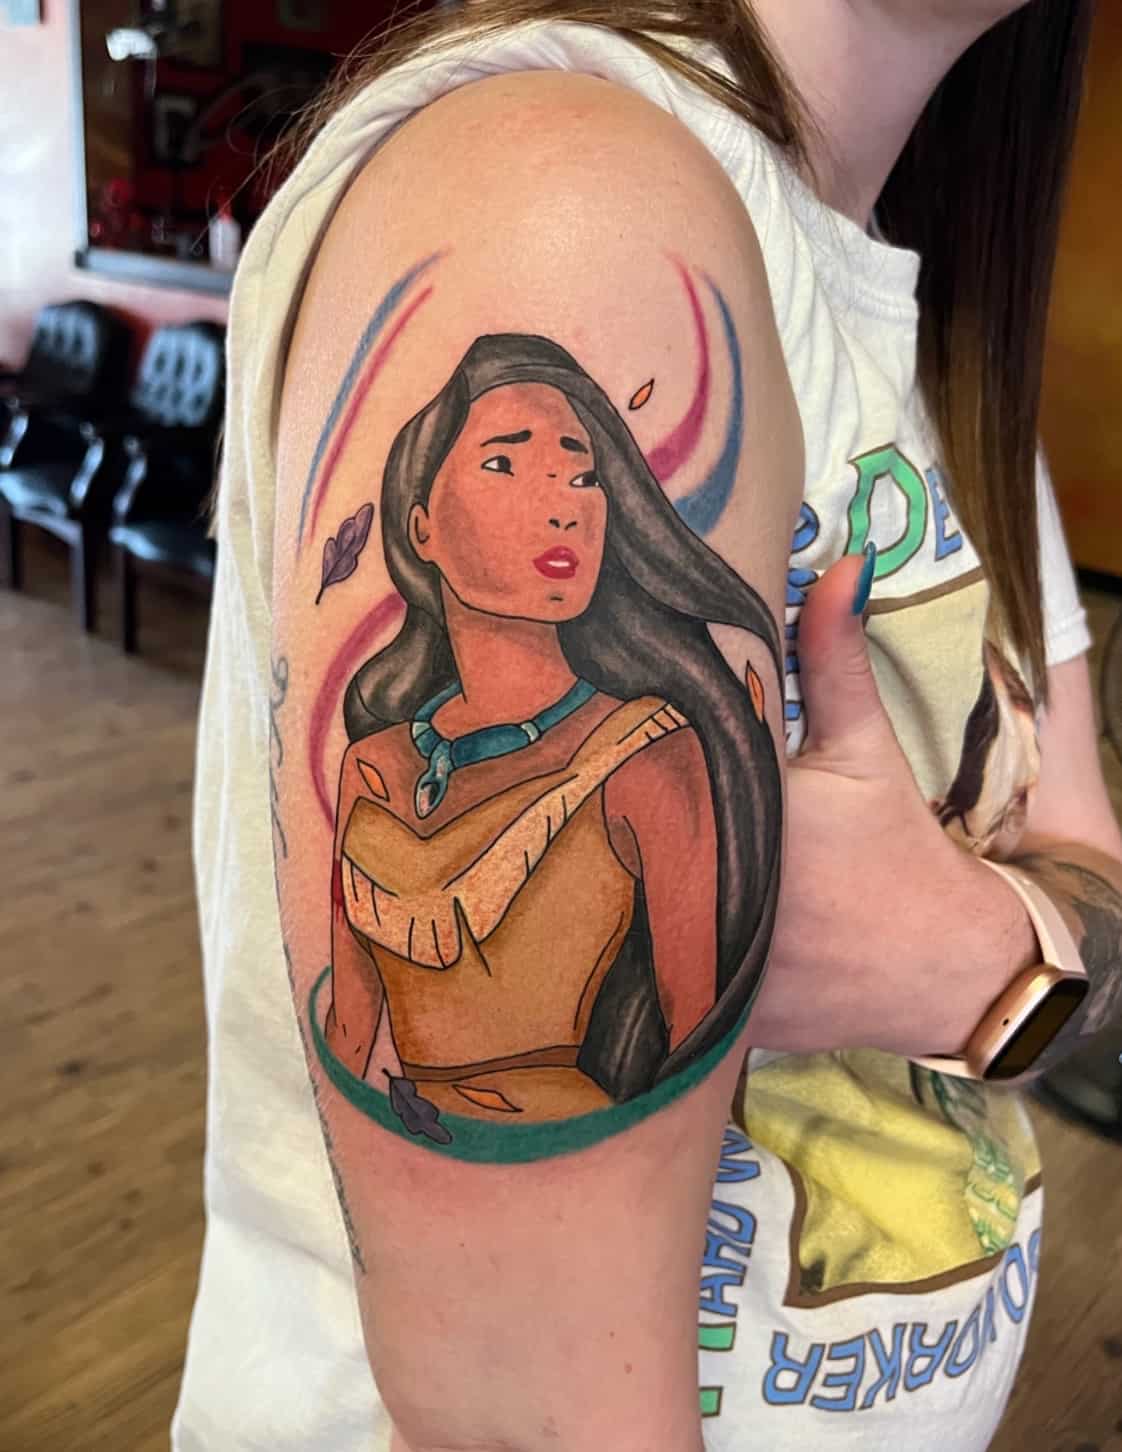 Pocahontas Tattoo